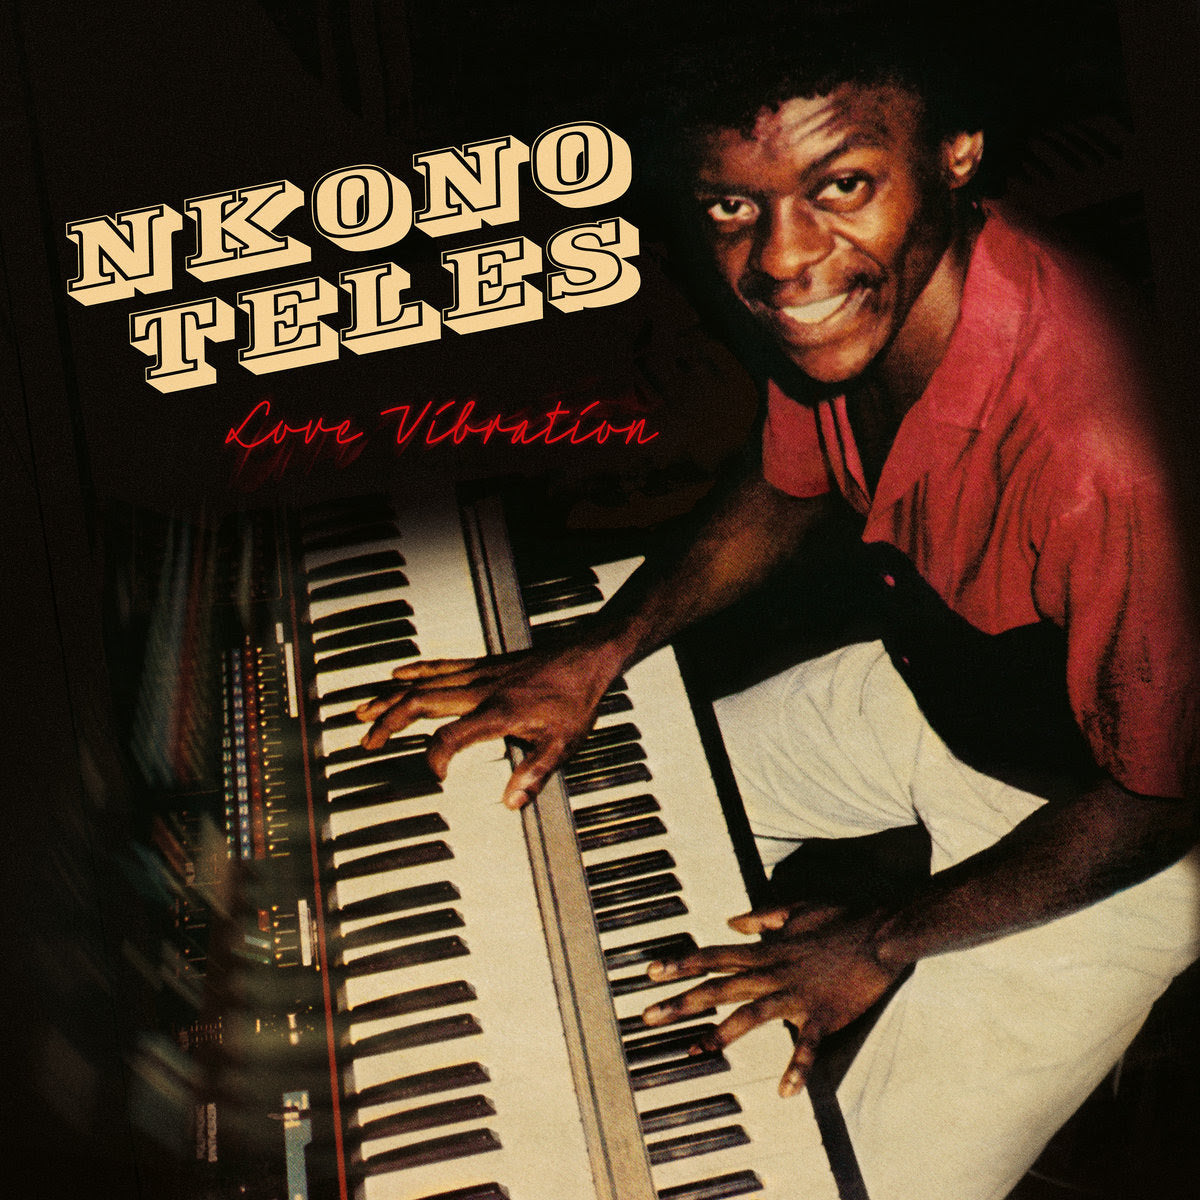 Nkono Teles - Love Vibration | Buy the Vinyl LP from Flying Nun Records